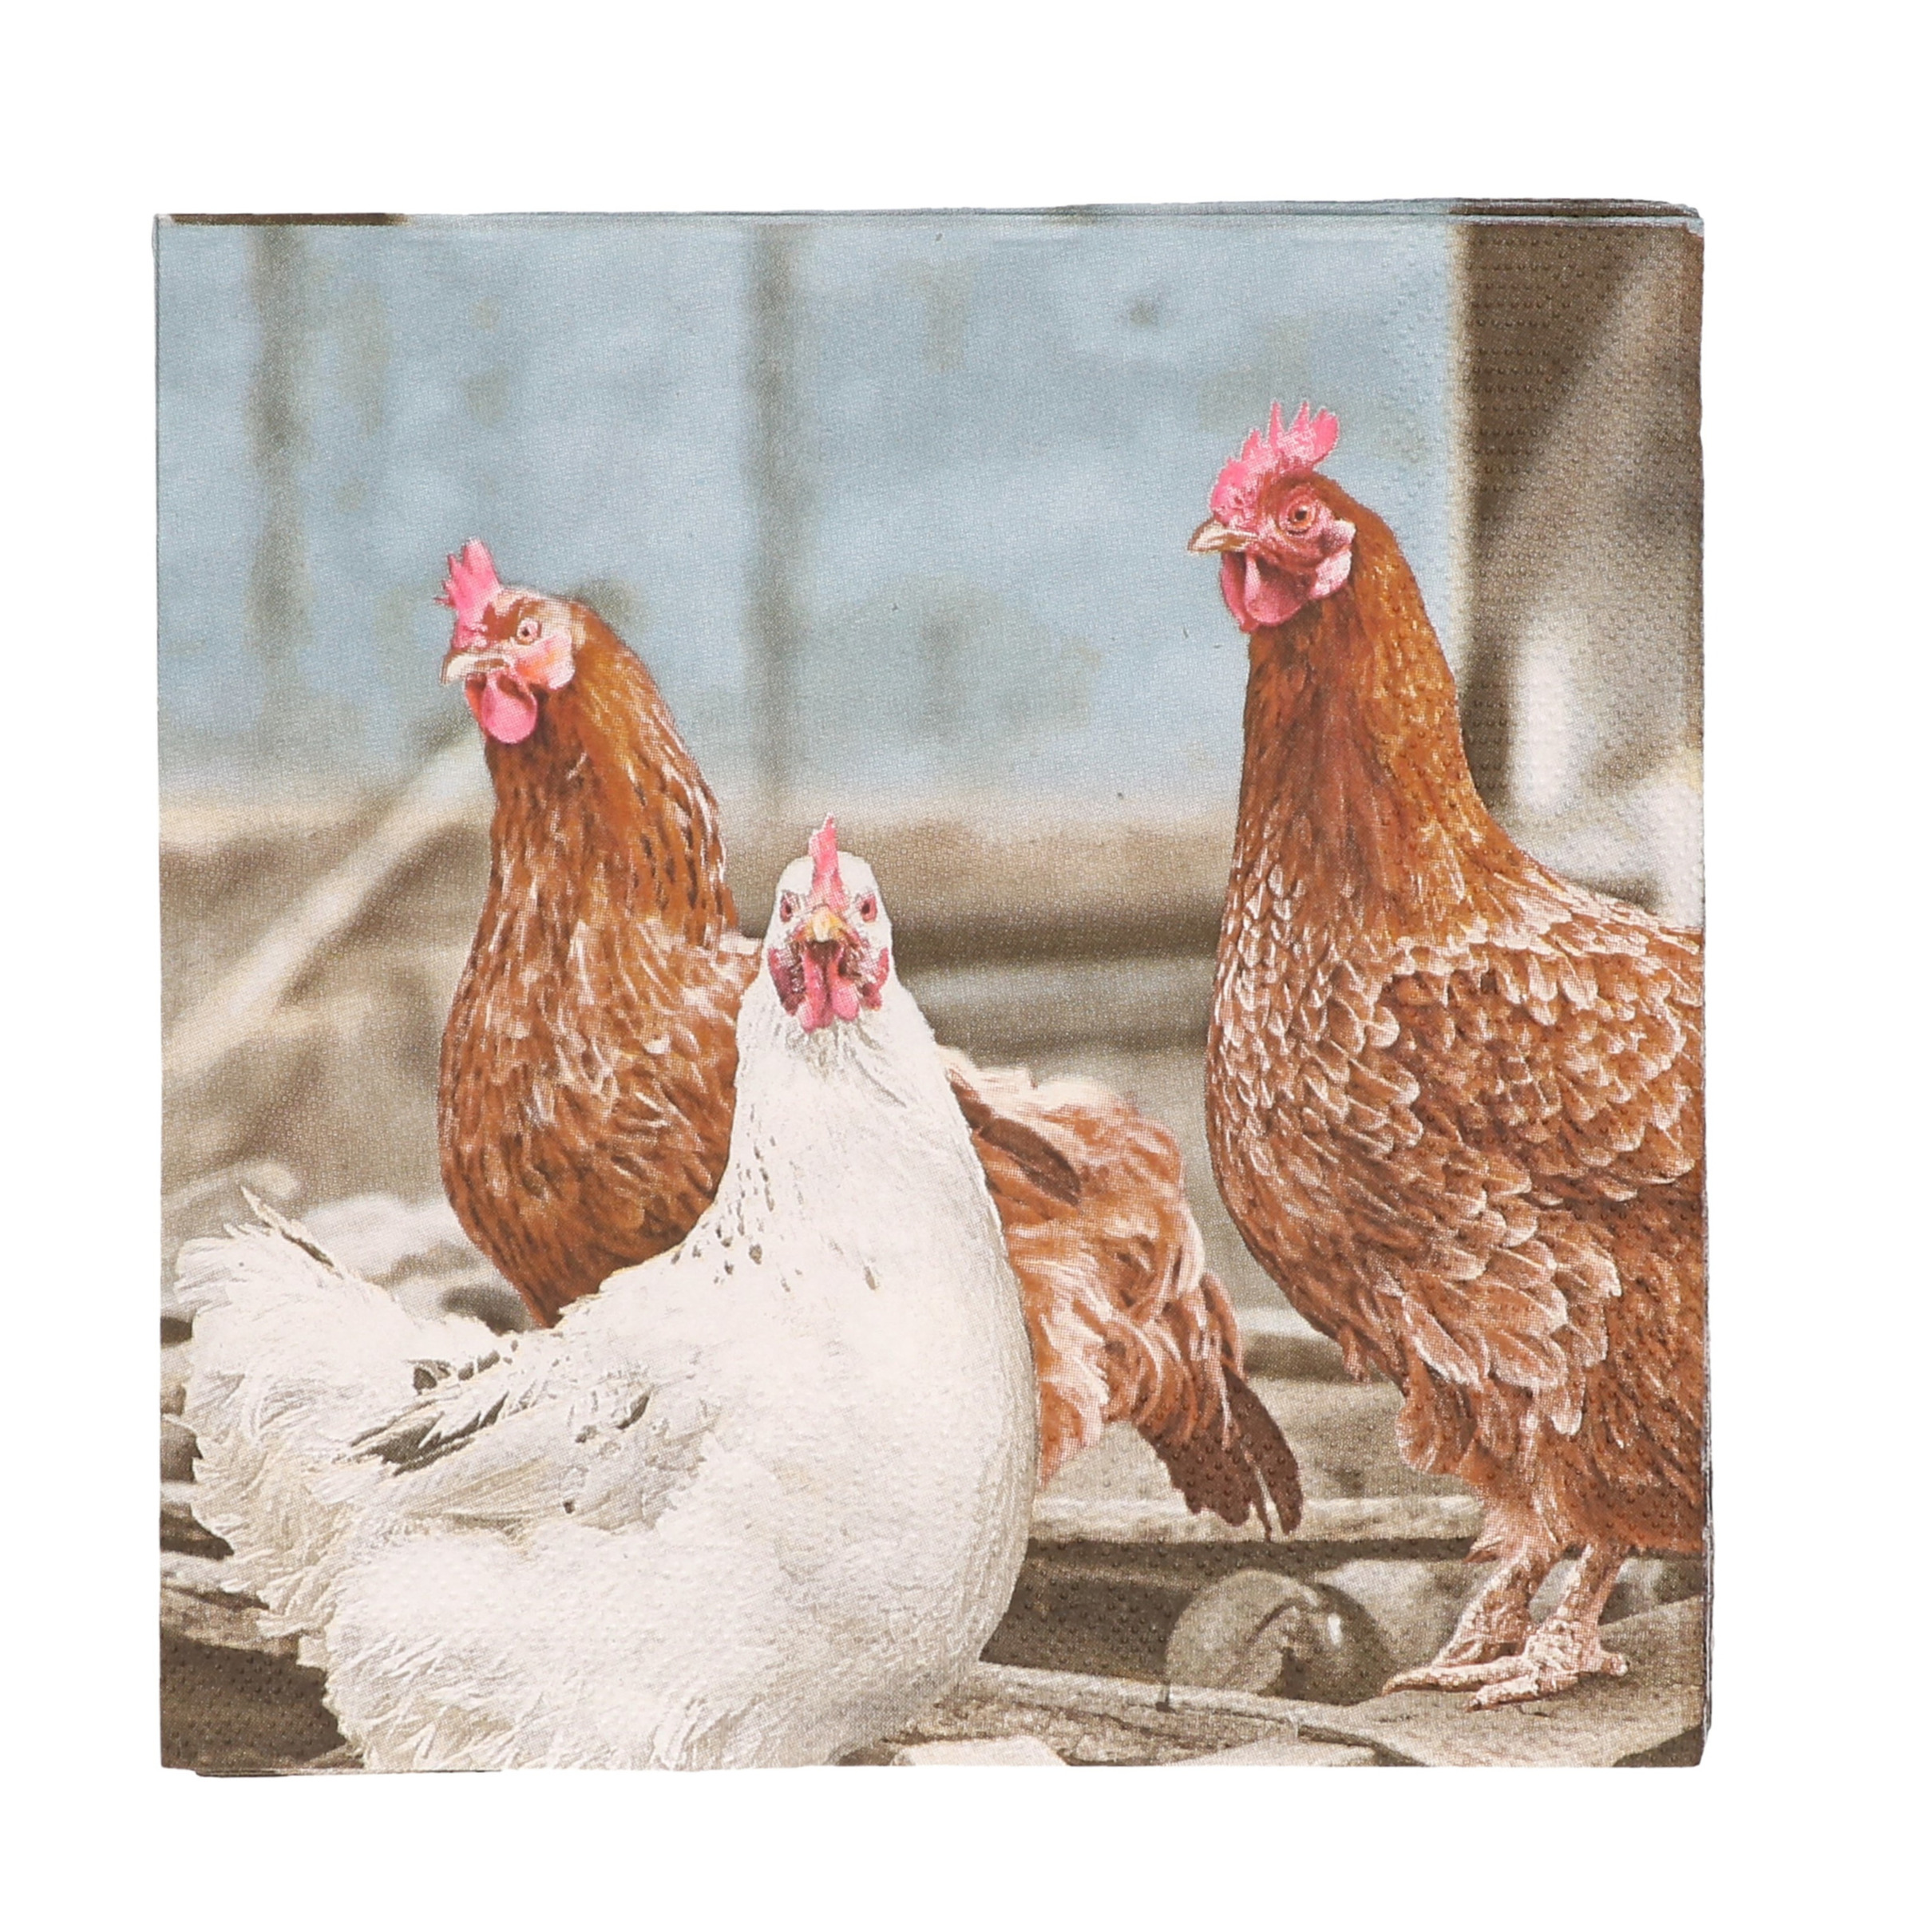 20x Pasen thema servetten met kippen print 33 x 33 cm